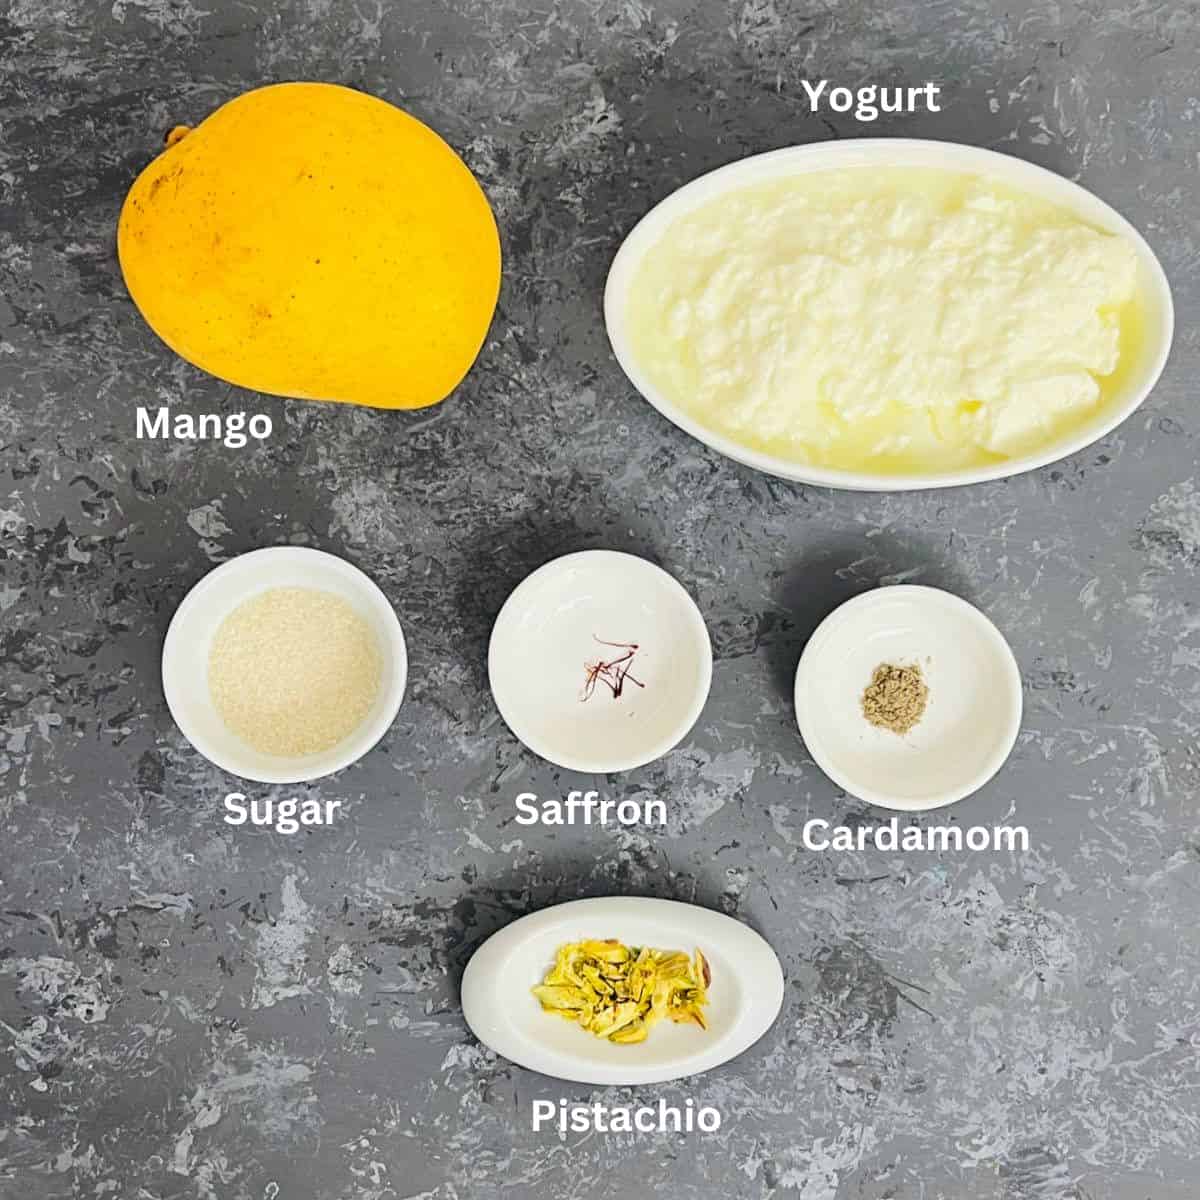 mango lassi ingredients with labels.